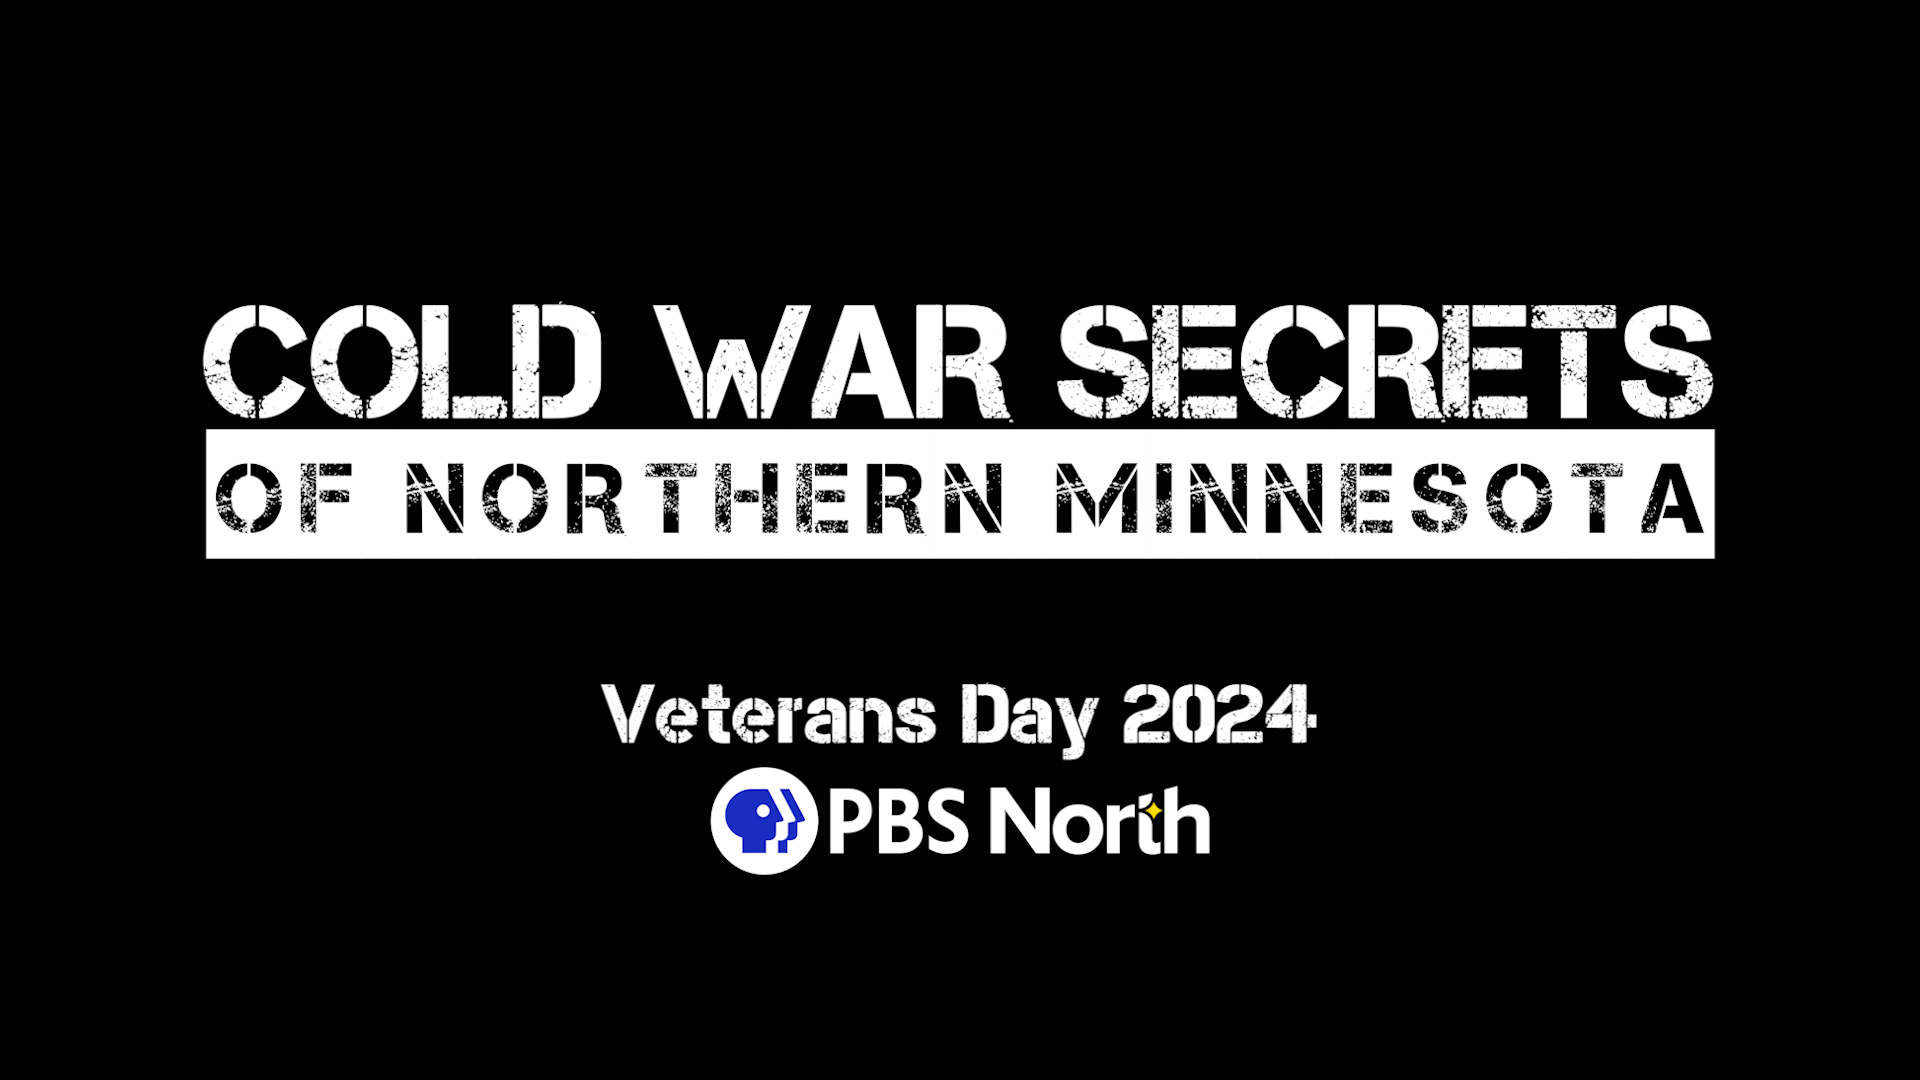 Cold War Secrets of Northern Minnesota bold logo with a black background.